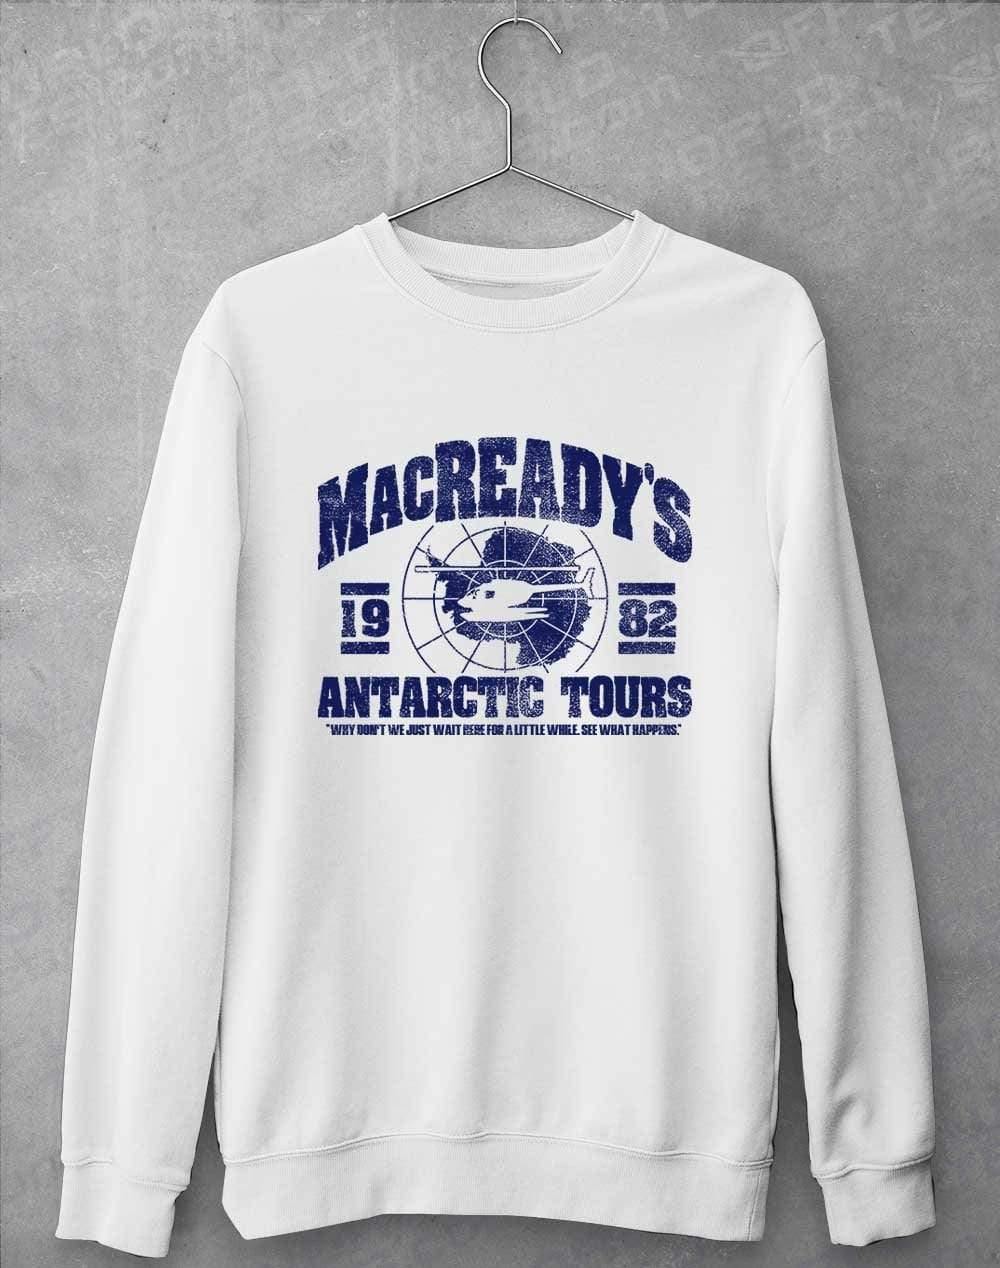 MacReady's Antarctic Tours 1982 Sweatshirt S / Arctic White  - Off World Tees